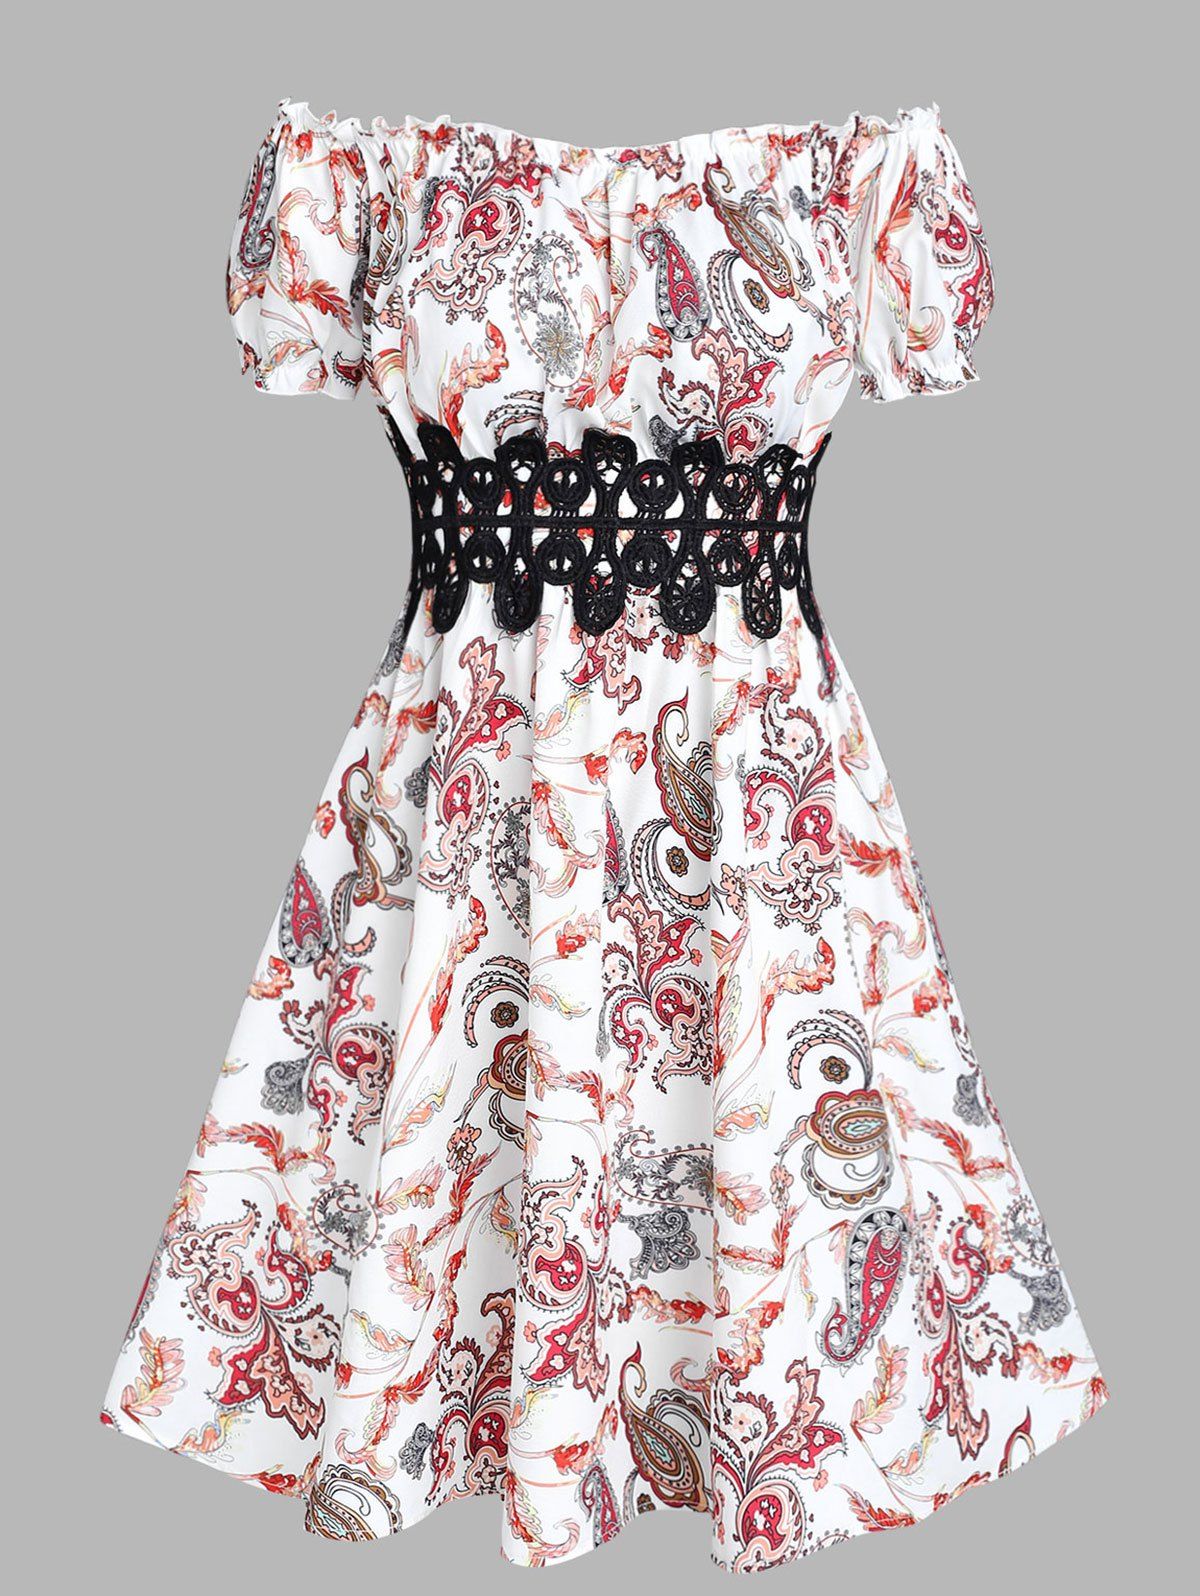 Bohemian Off Shoulder Paisley Print Applique Insert Frilled Dress - multicolor L